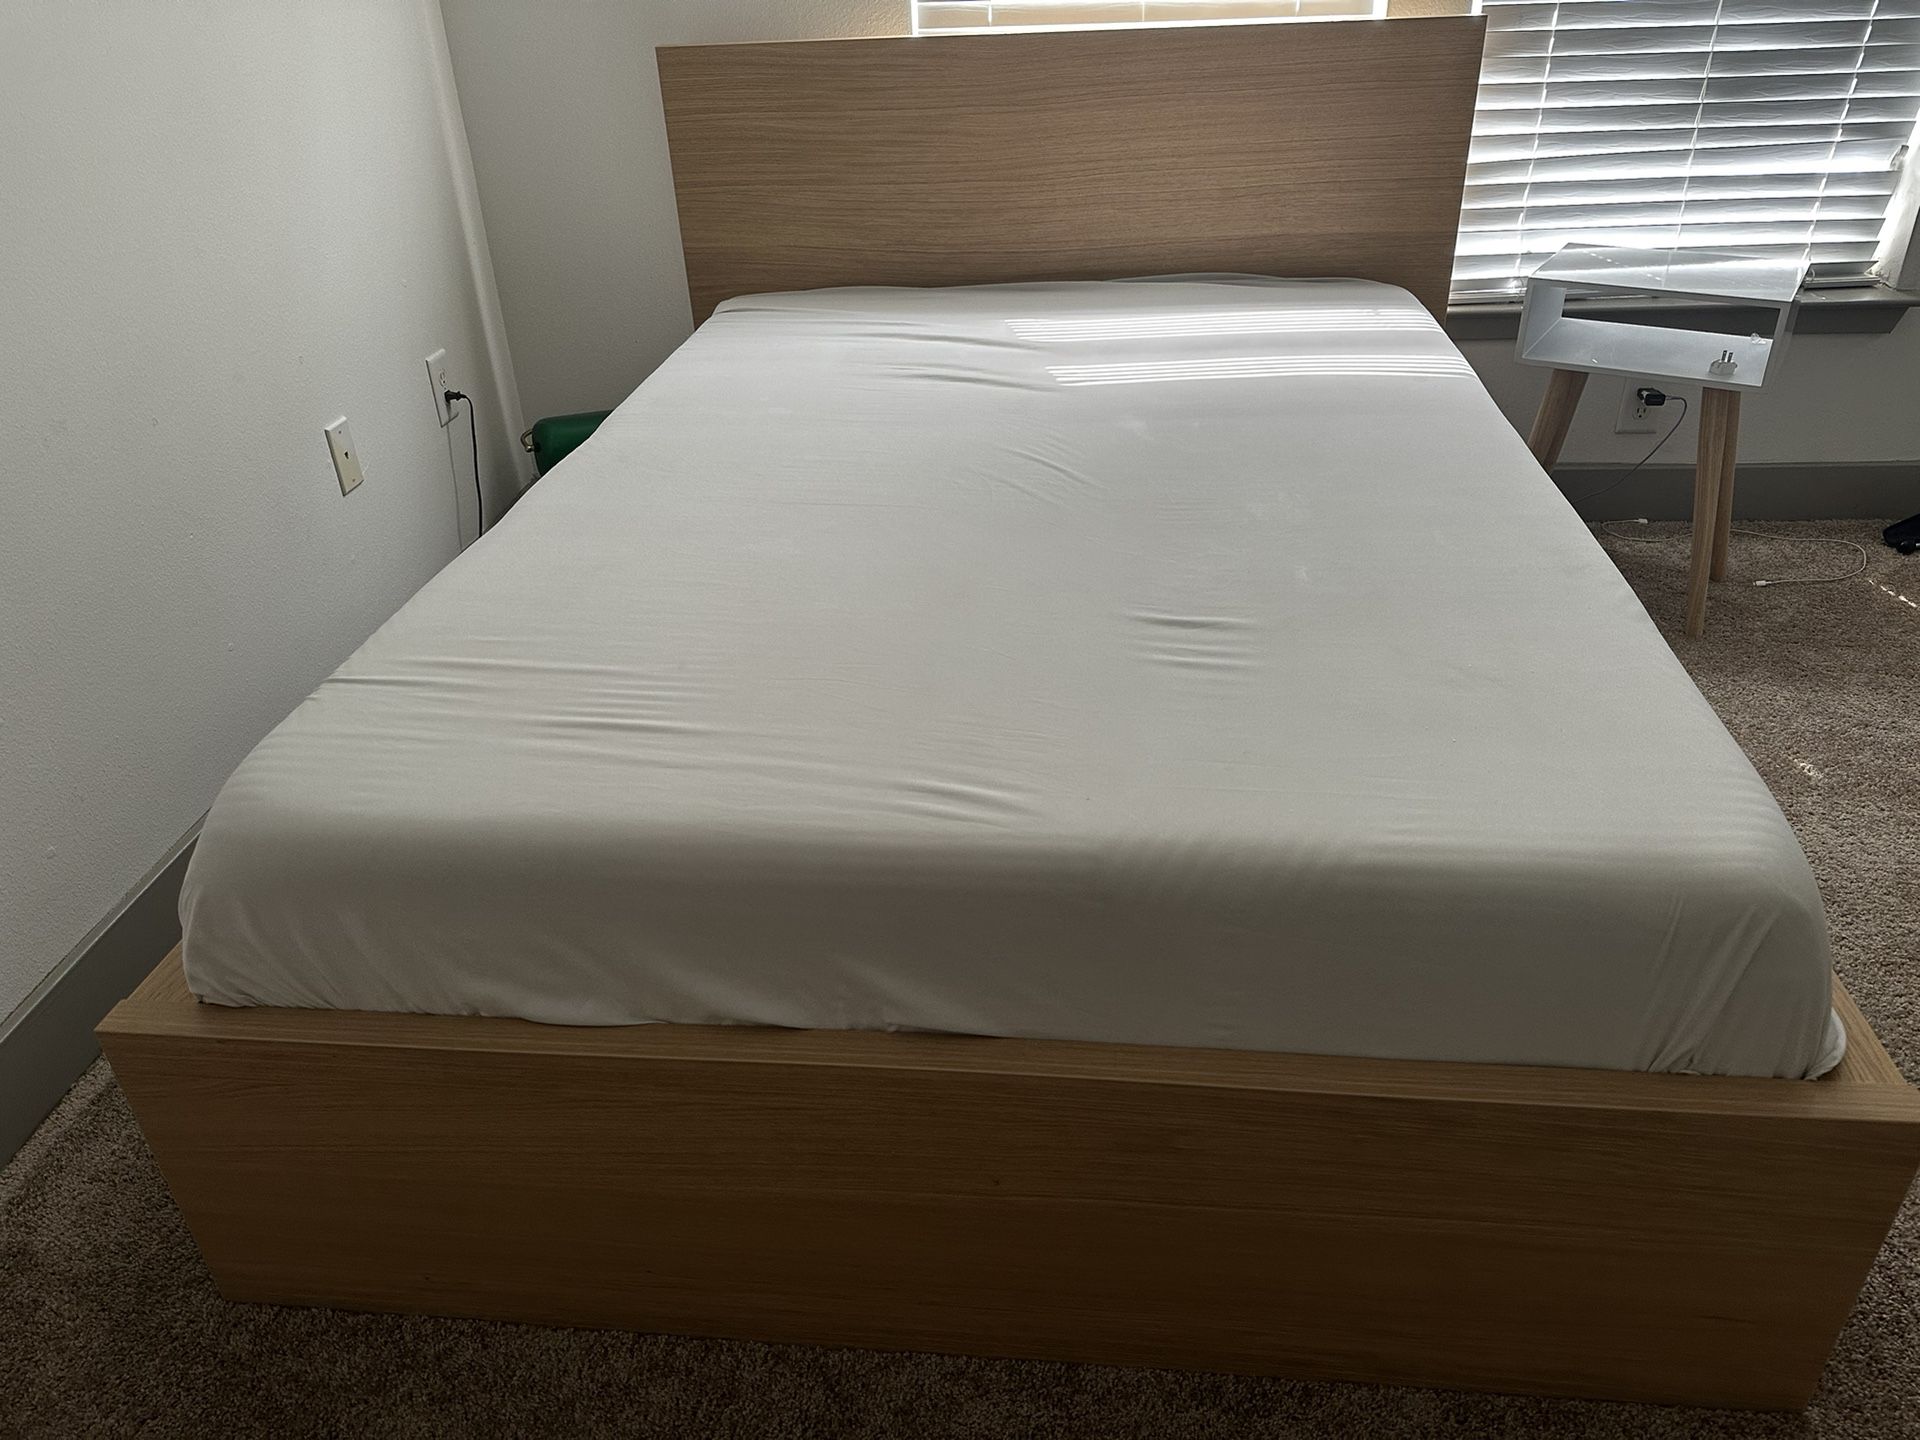 IKEA Malm Bed Full Size